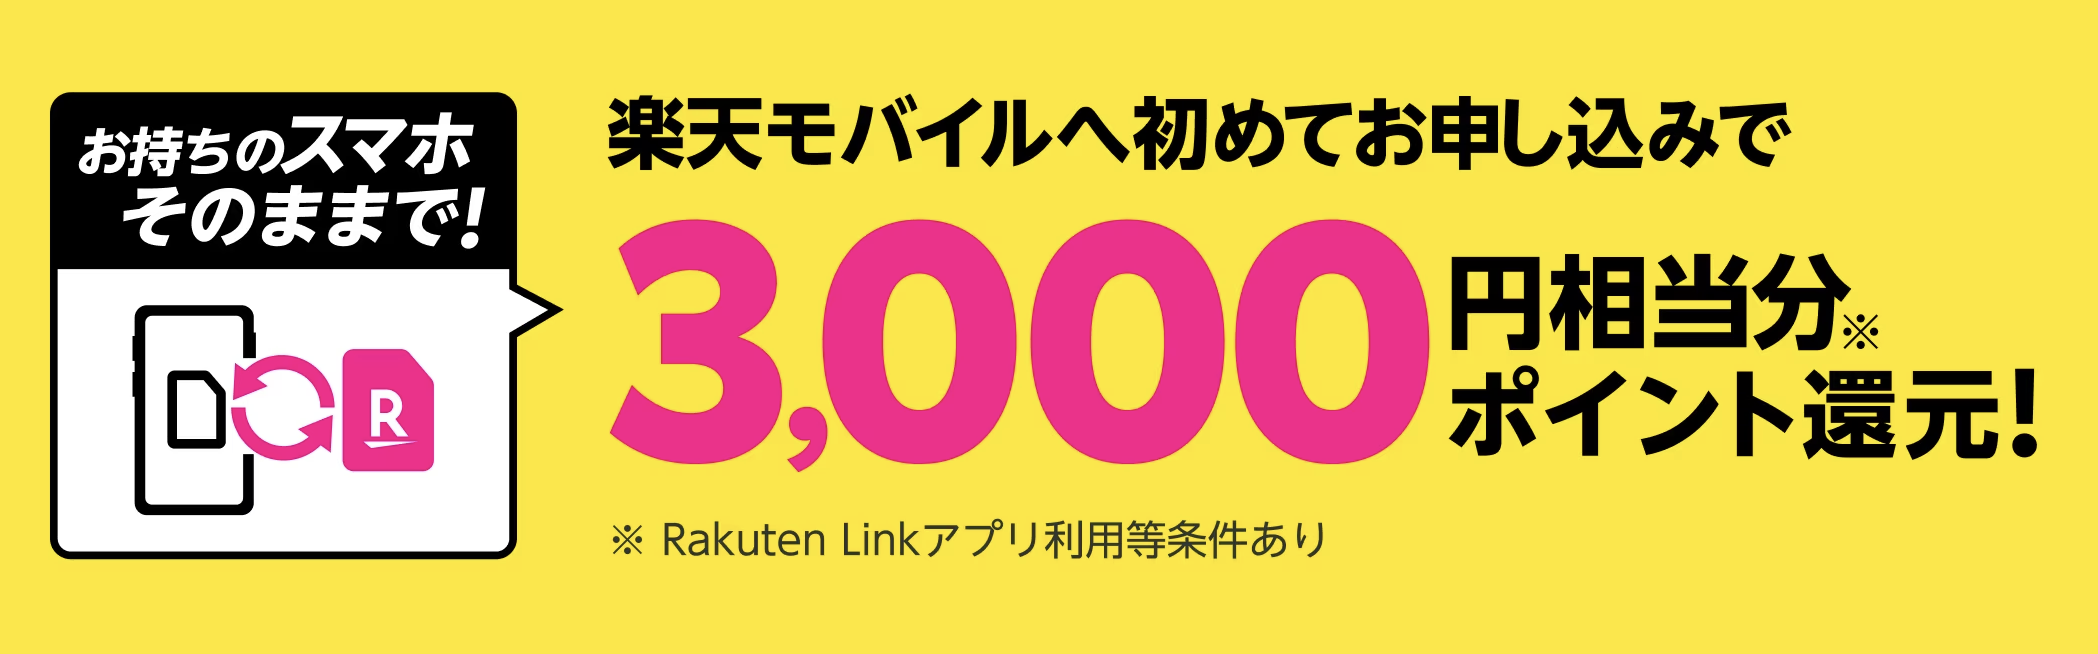 【Rakuten最強プランお申し込み特典】だれでも3,000ポイントプレゼント